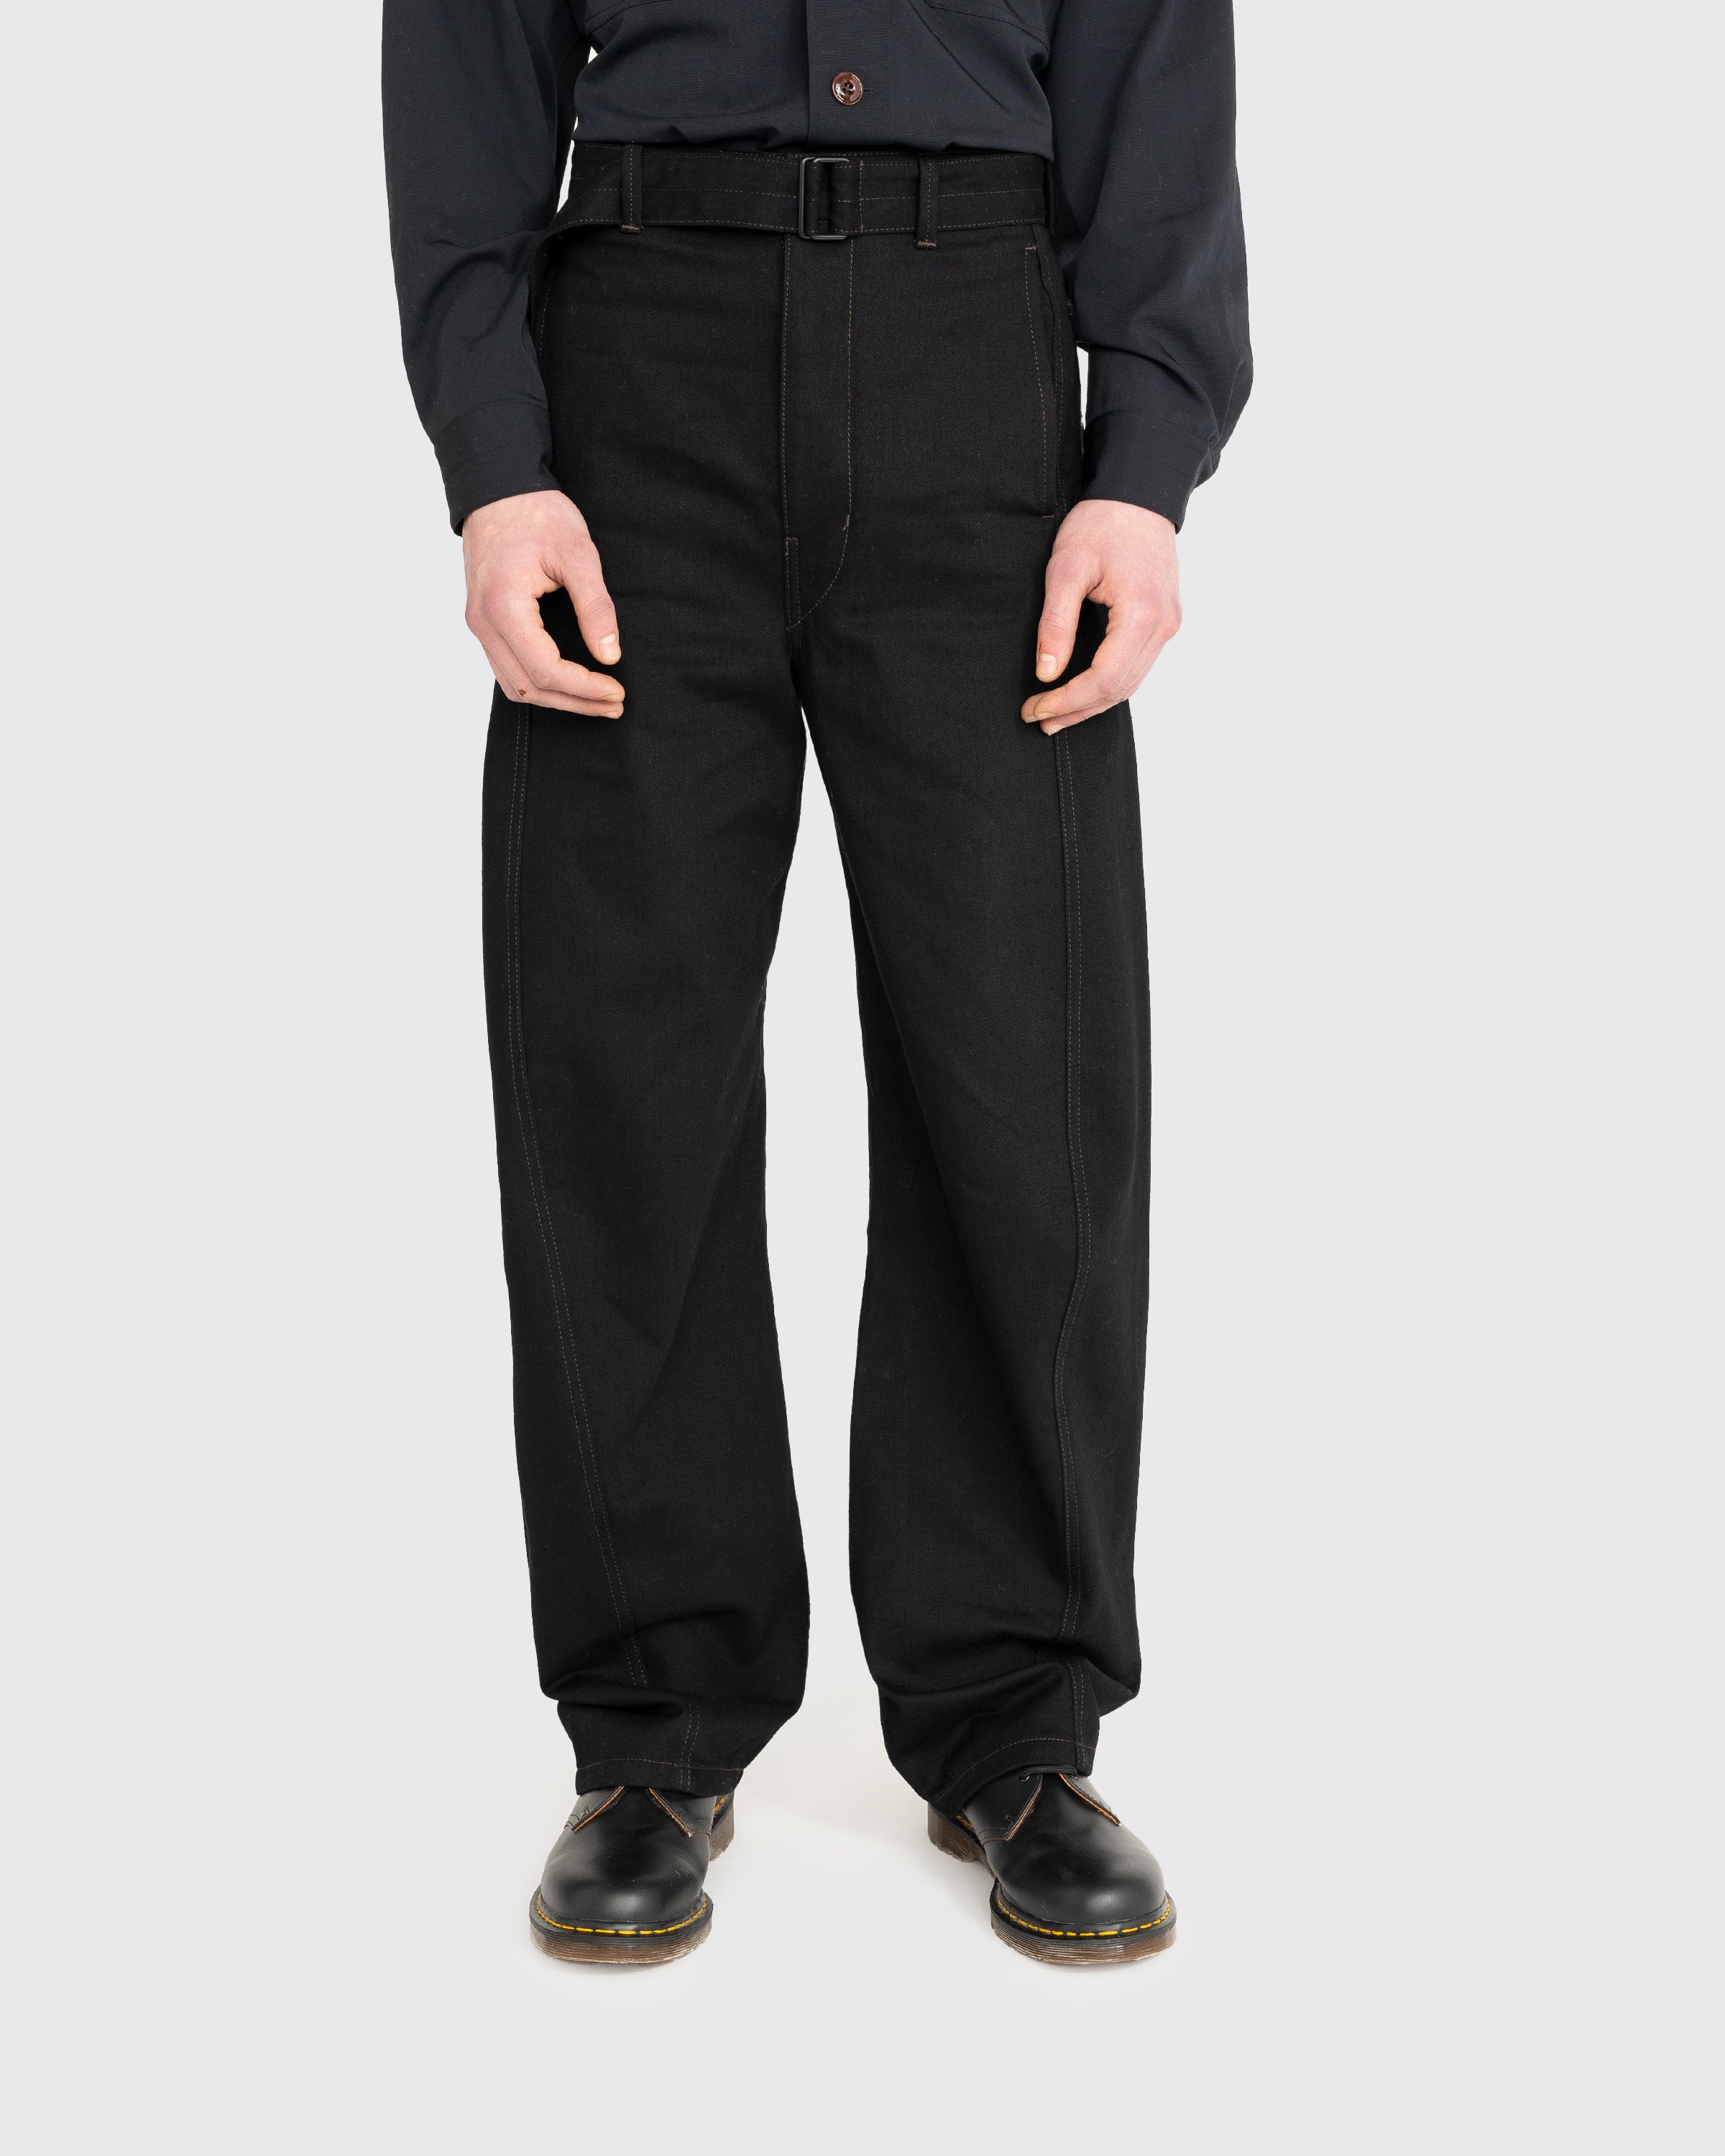 Lemaire - Twisted Belted Pants Black - Clothing - Black - Image 2